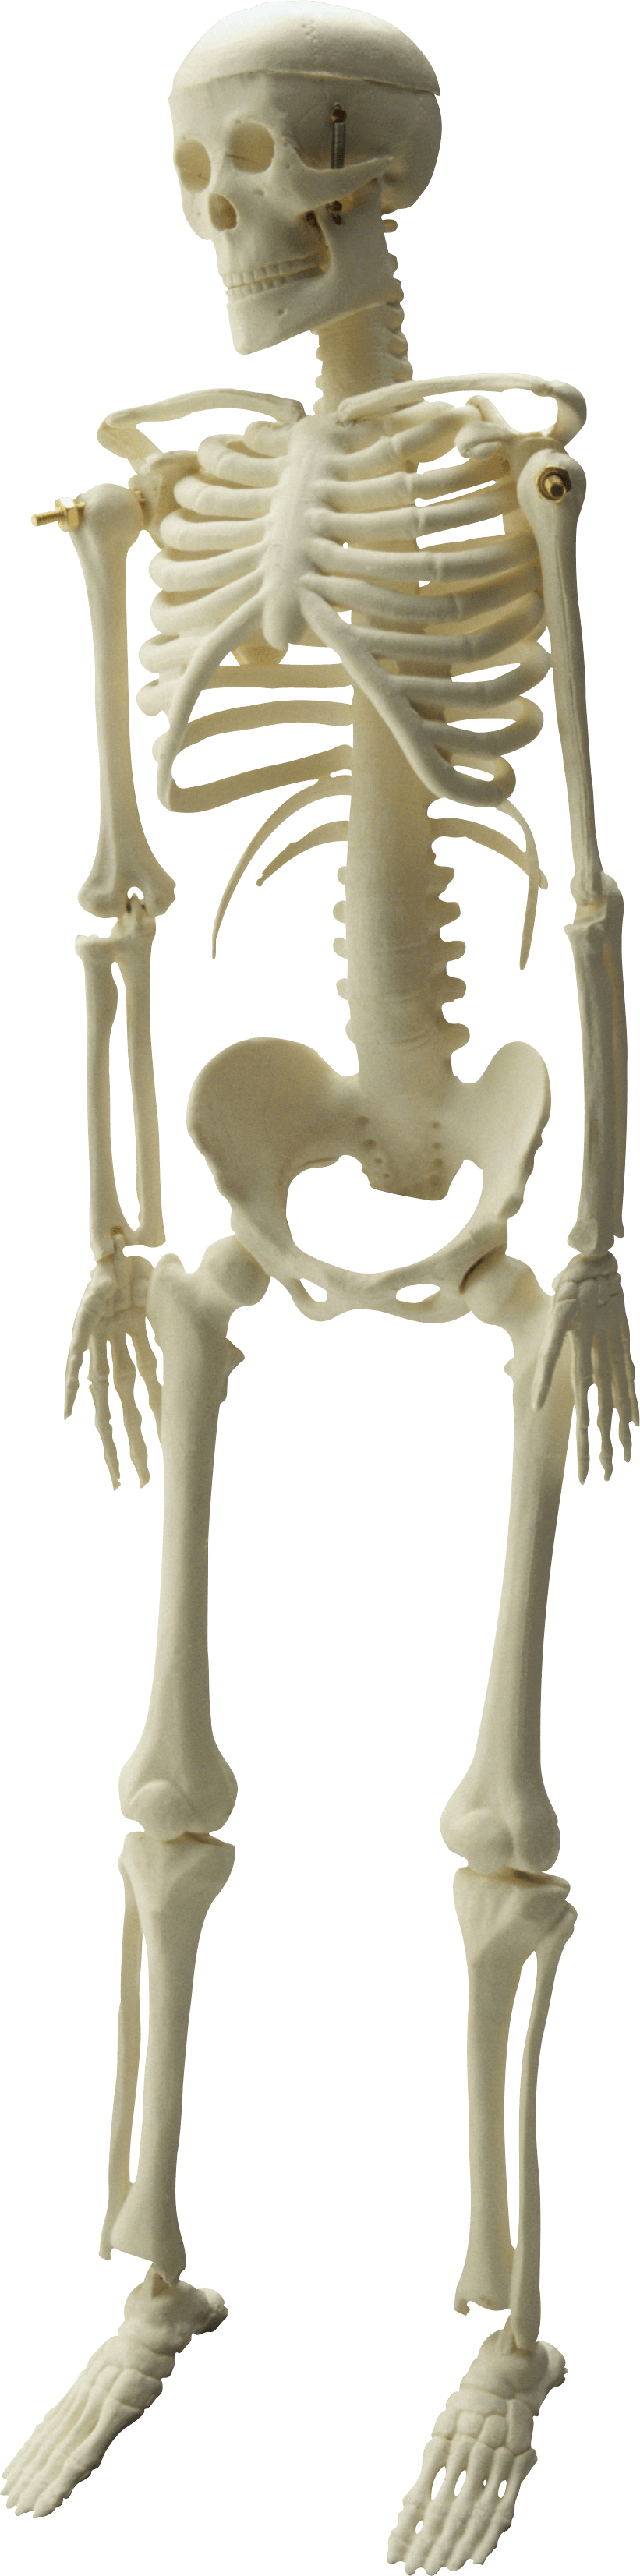 Full Body Skeleton PNG Transparent Image